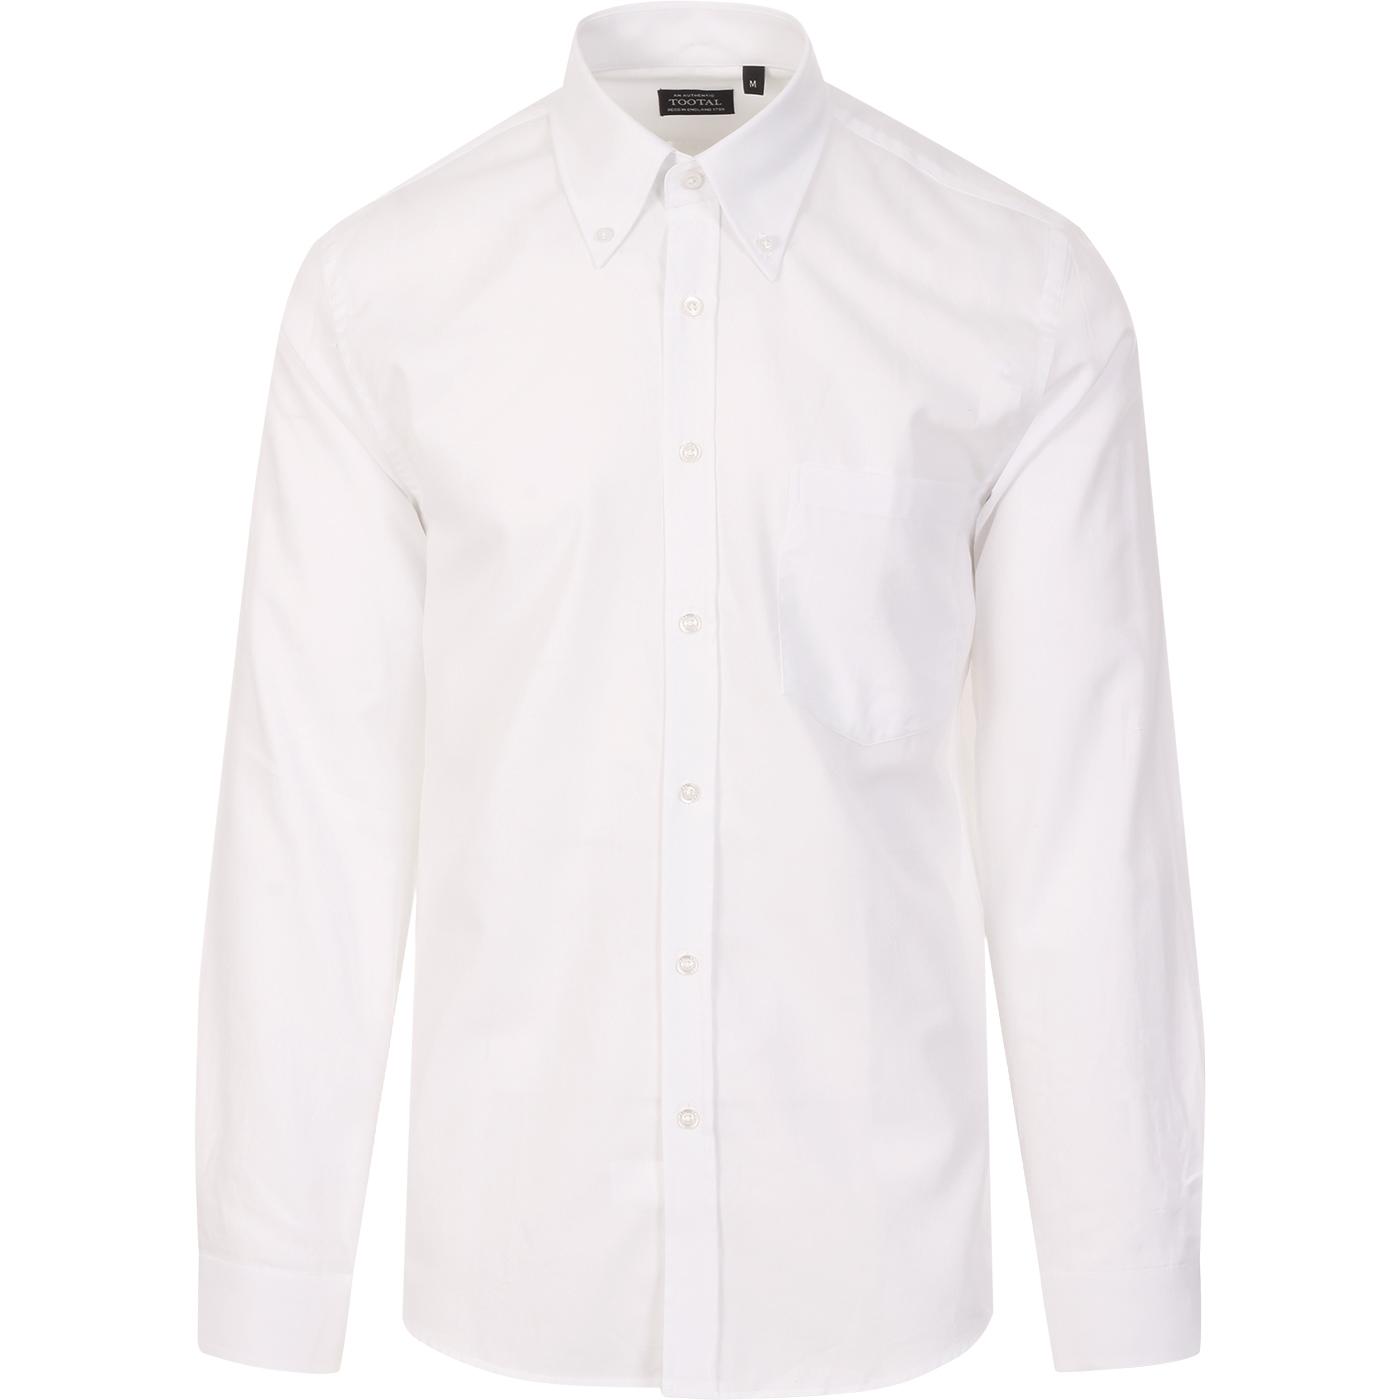 TOOTAL 60s Mod Plain White Button Down Oxford Shirt